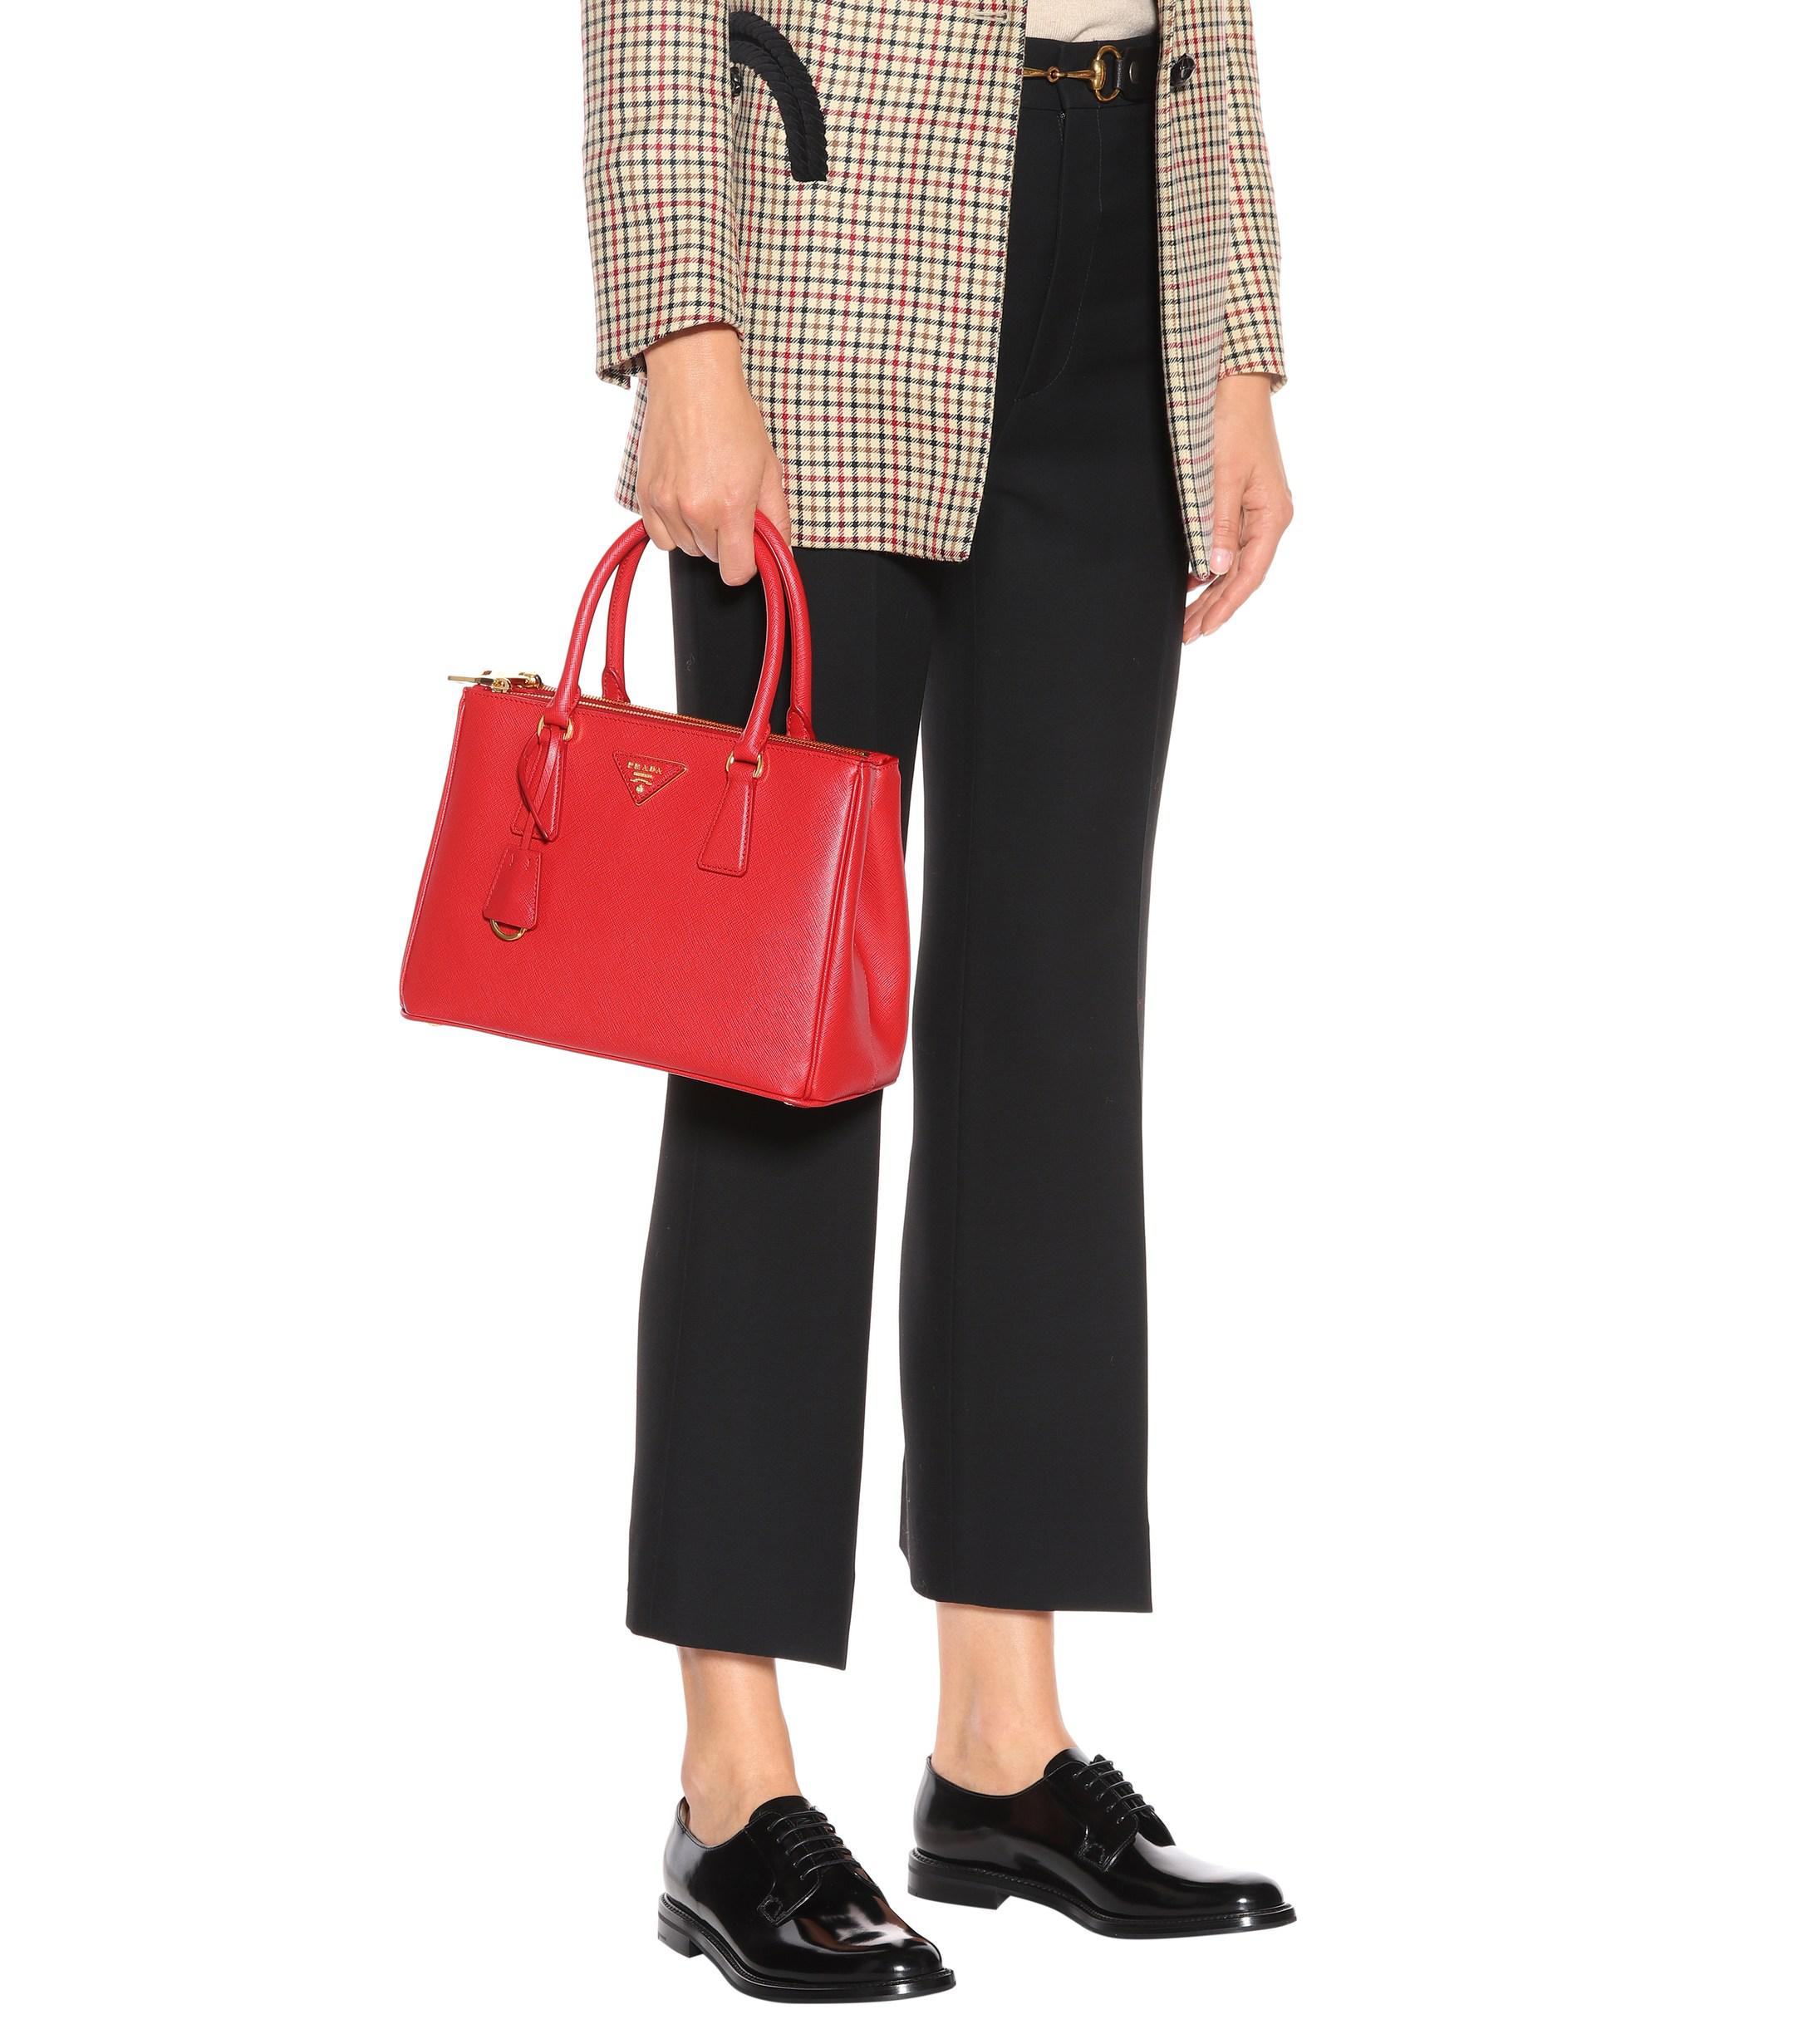 Prada Galleria Saffiano Small Leather Shoulder Bag in Red | Lyst